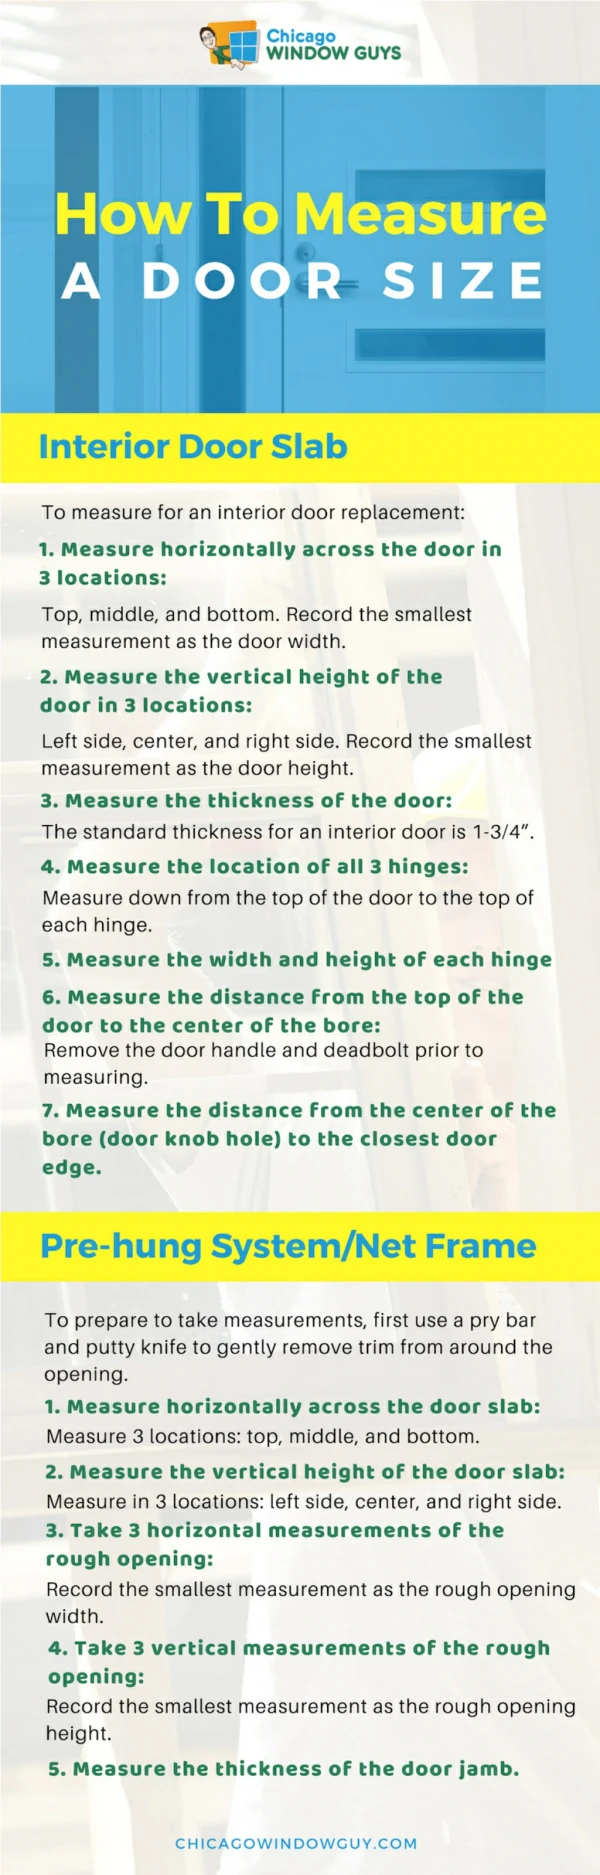 How to Properly Measure a Door